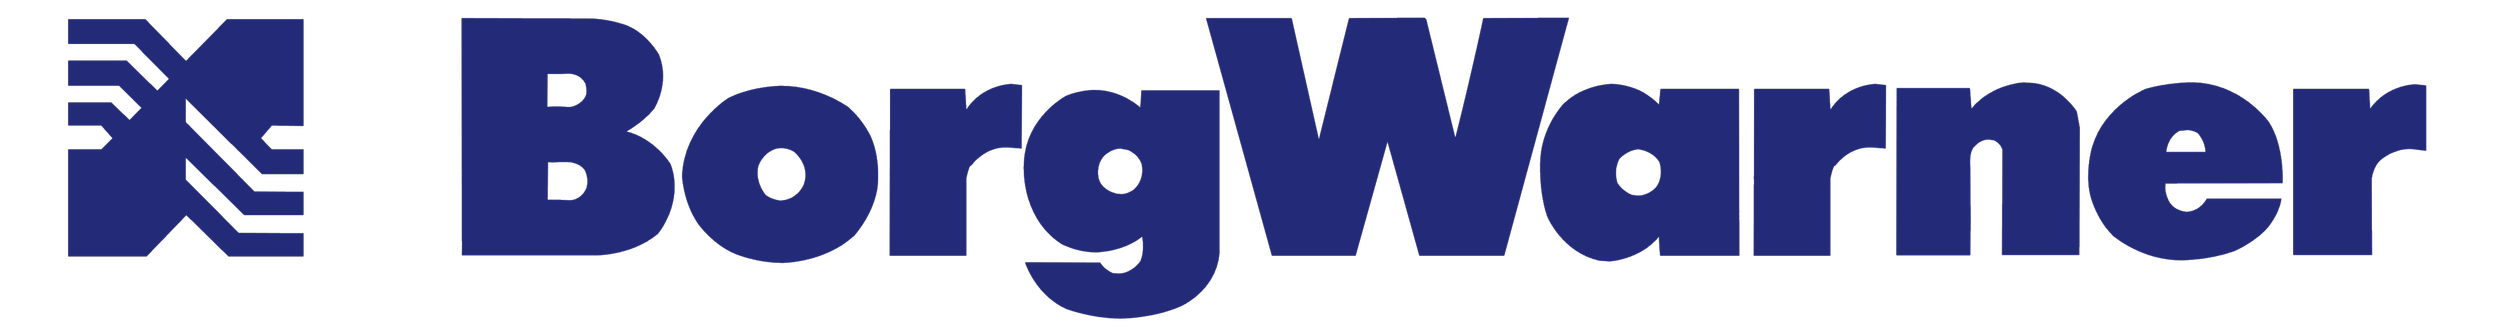 BorgWarner Logo.png